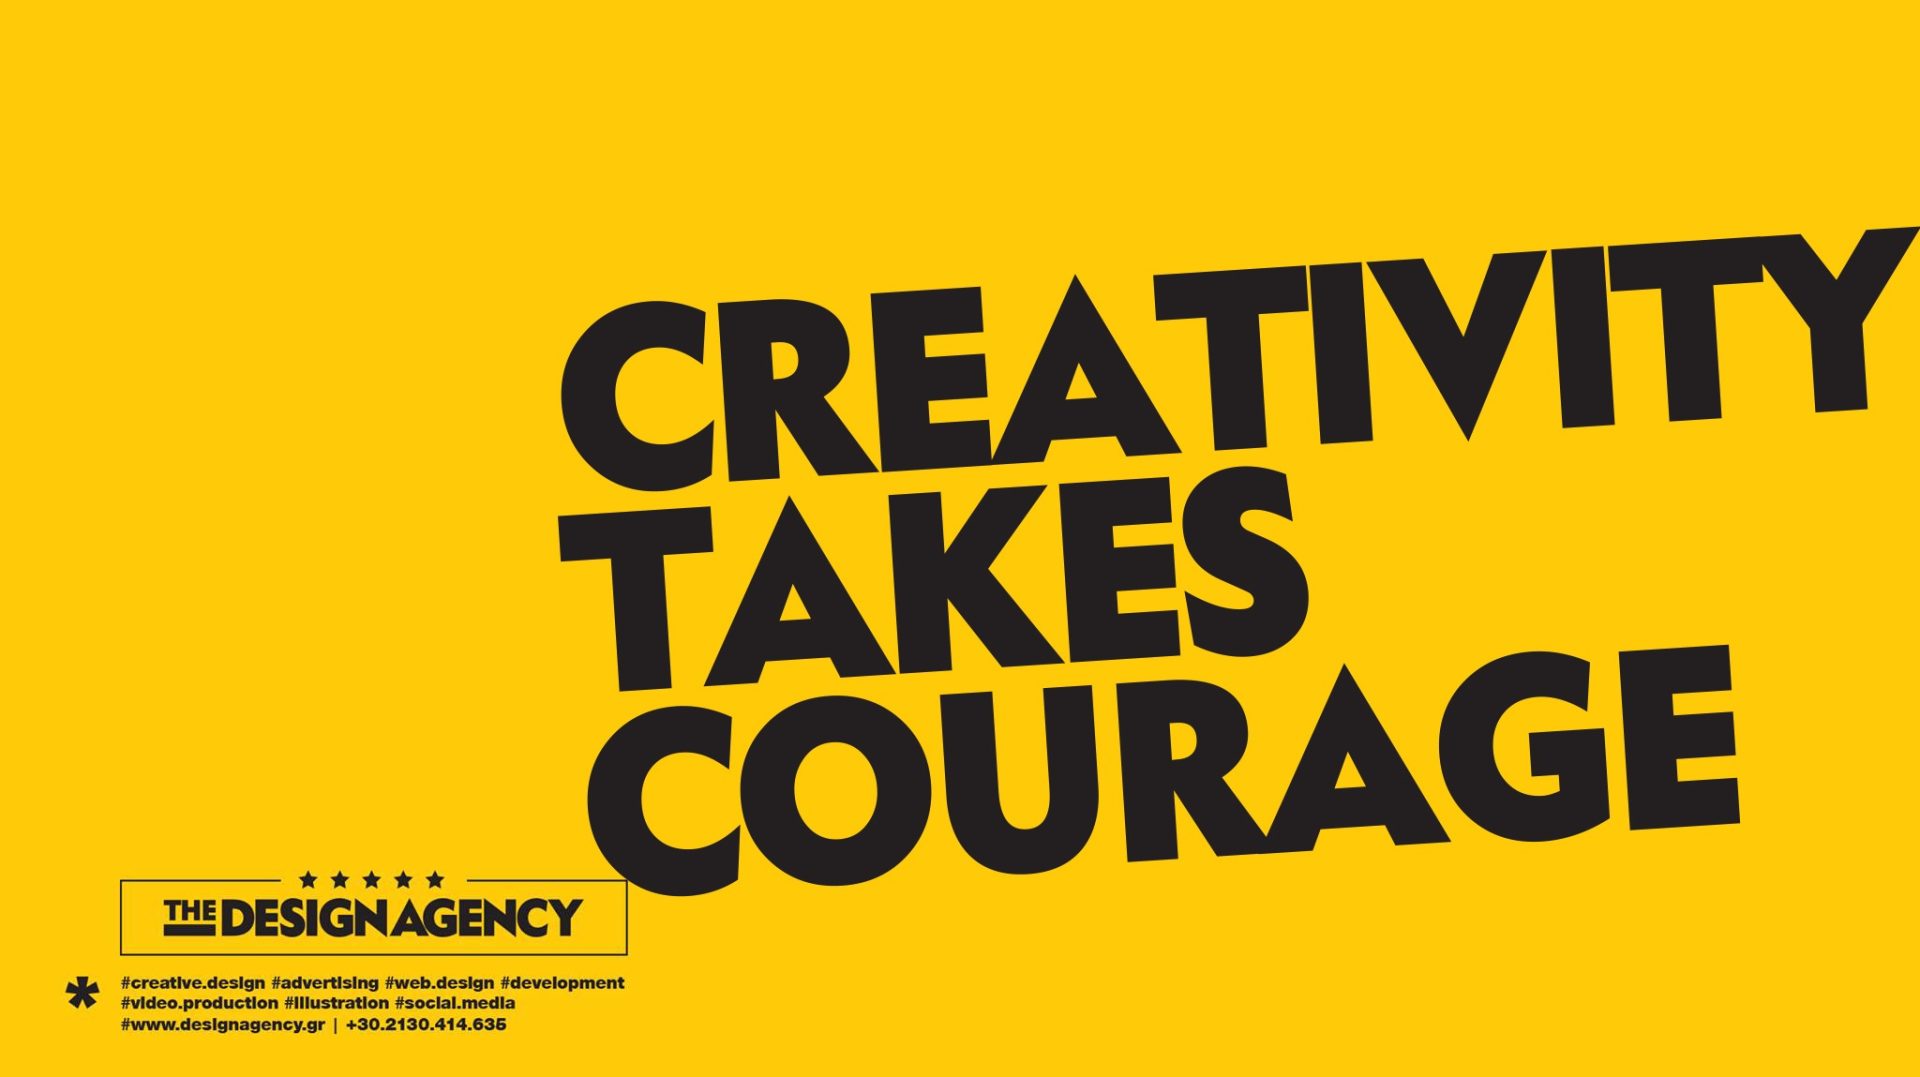 Creativity takes courage. Creative Design needs an Agency